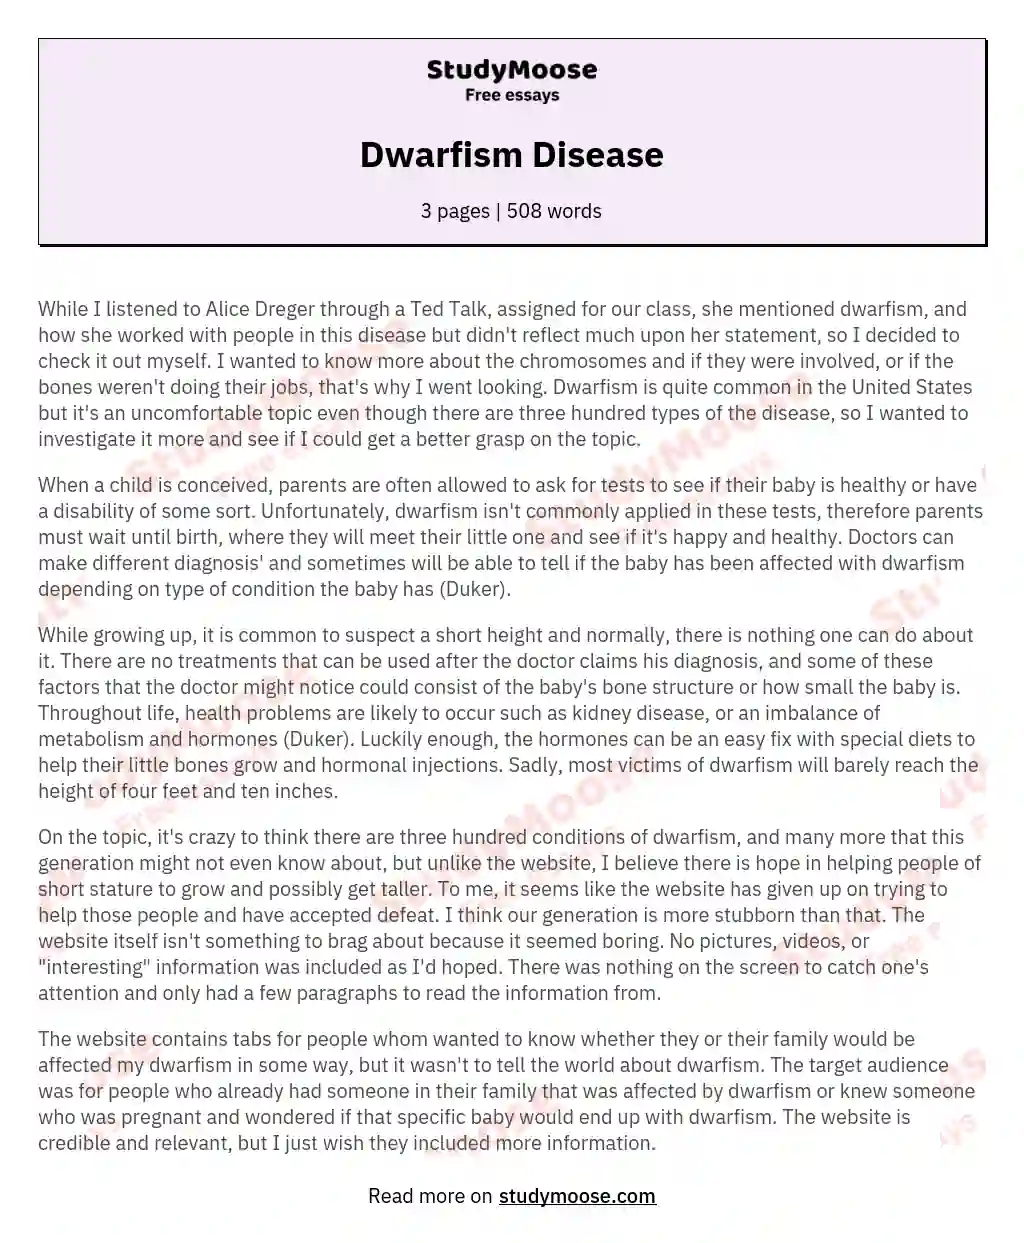 Dwarfism Disease essay